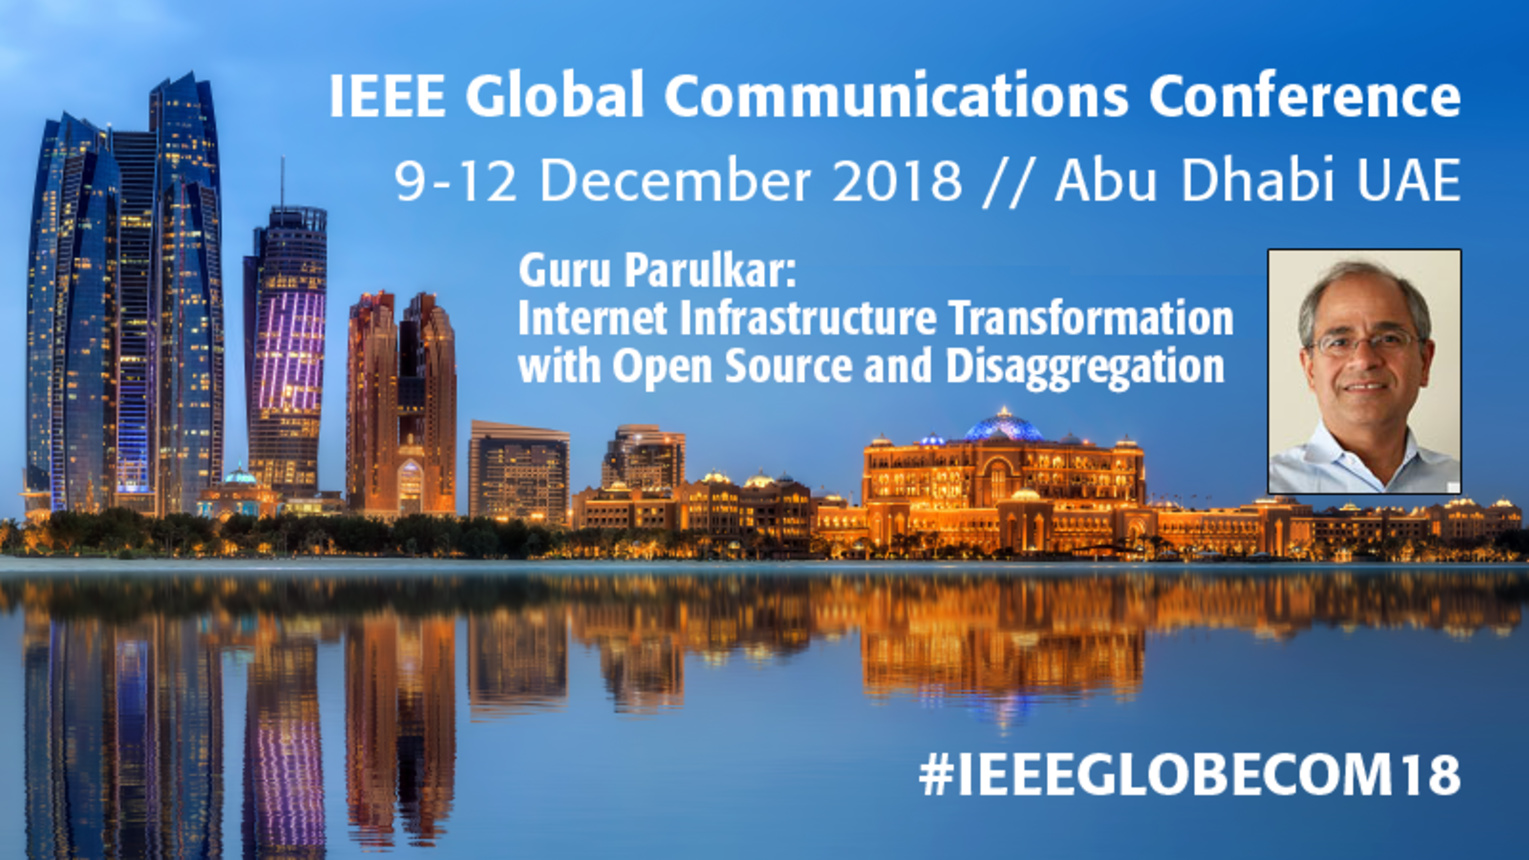 Internet Infrastructure Transformation with Open Source and Disaggregation - Guru Parulkar at IEEE GLOBECOM 2018